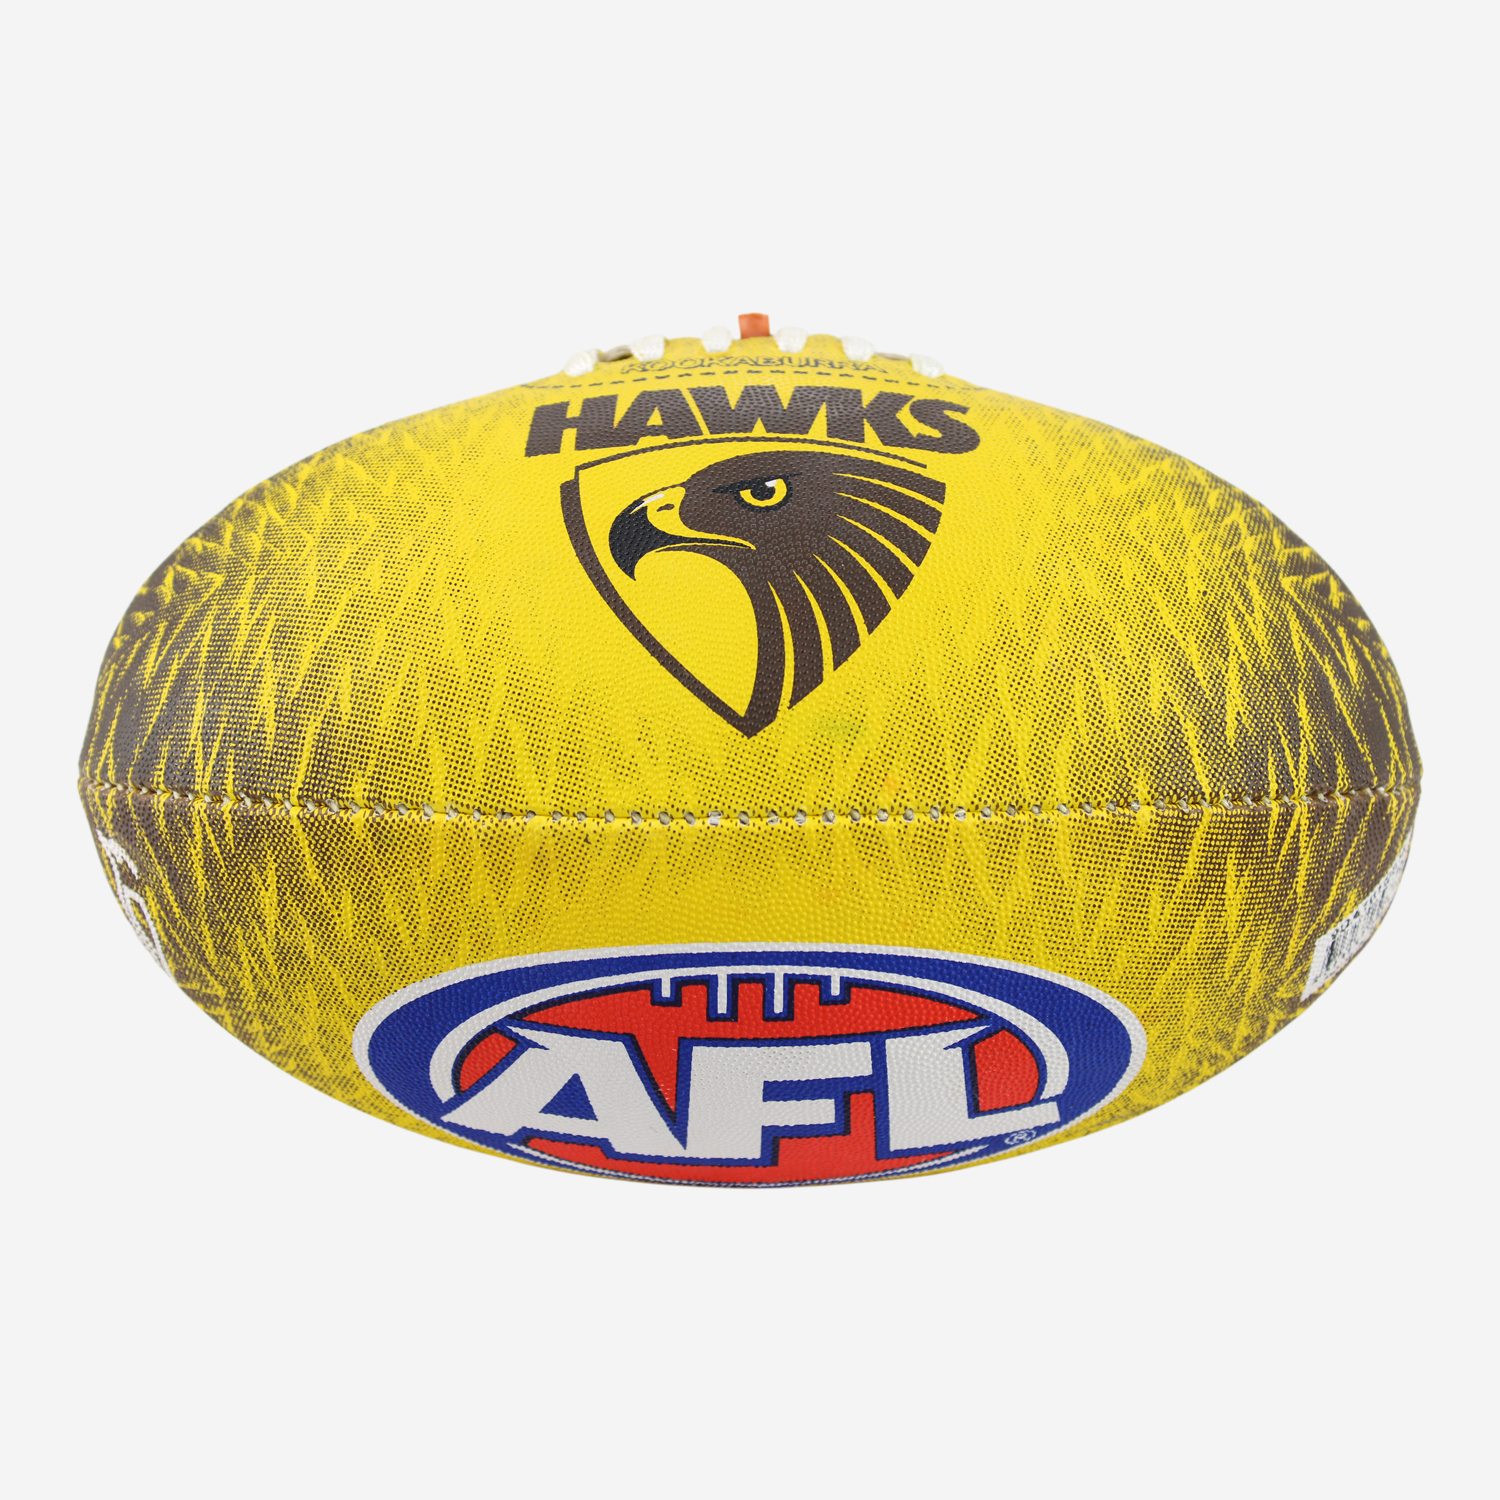 Hawks AFL Ball